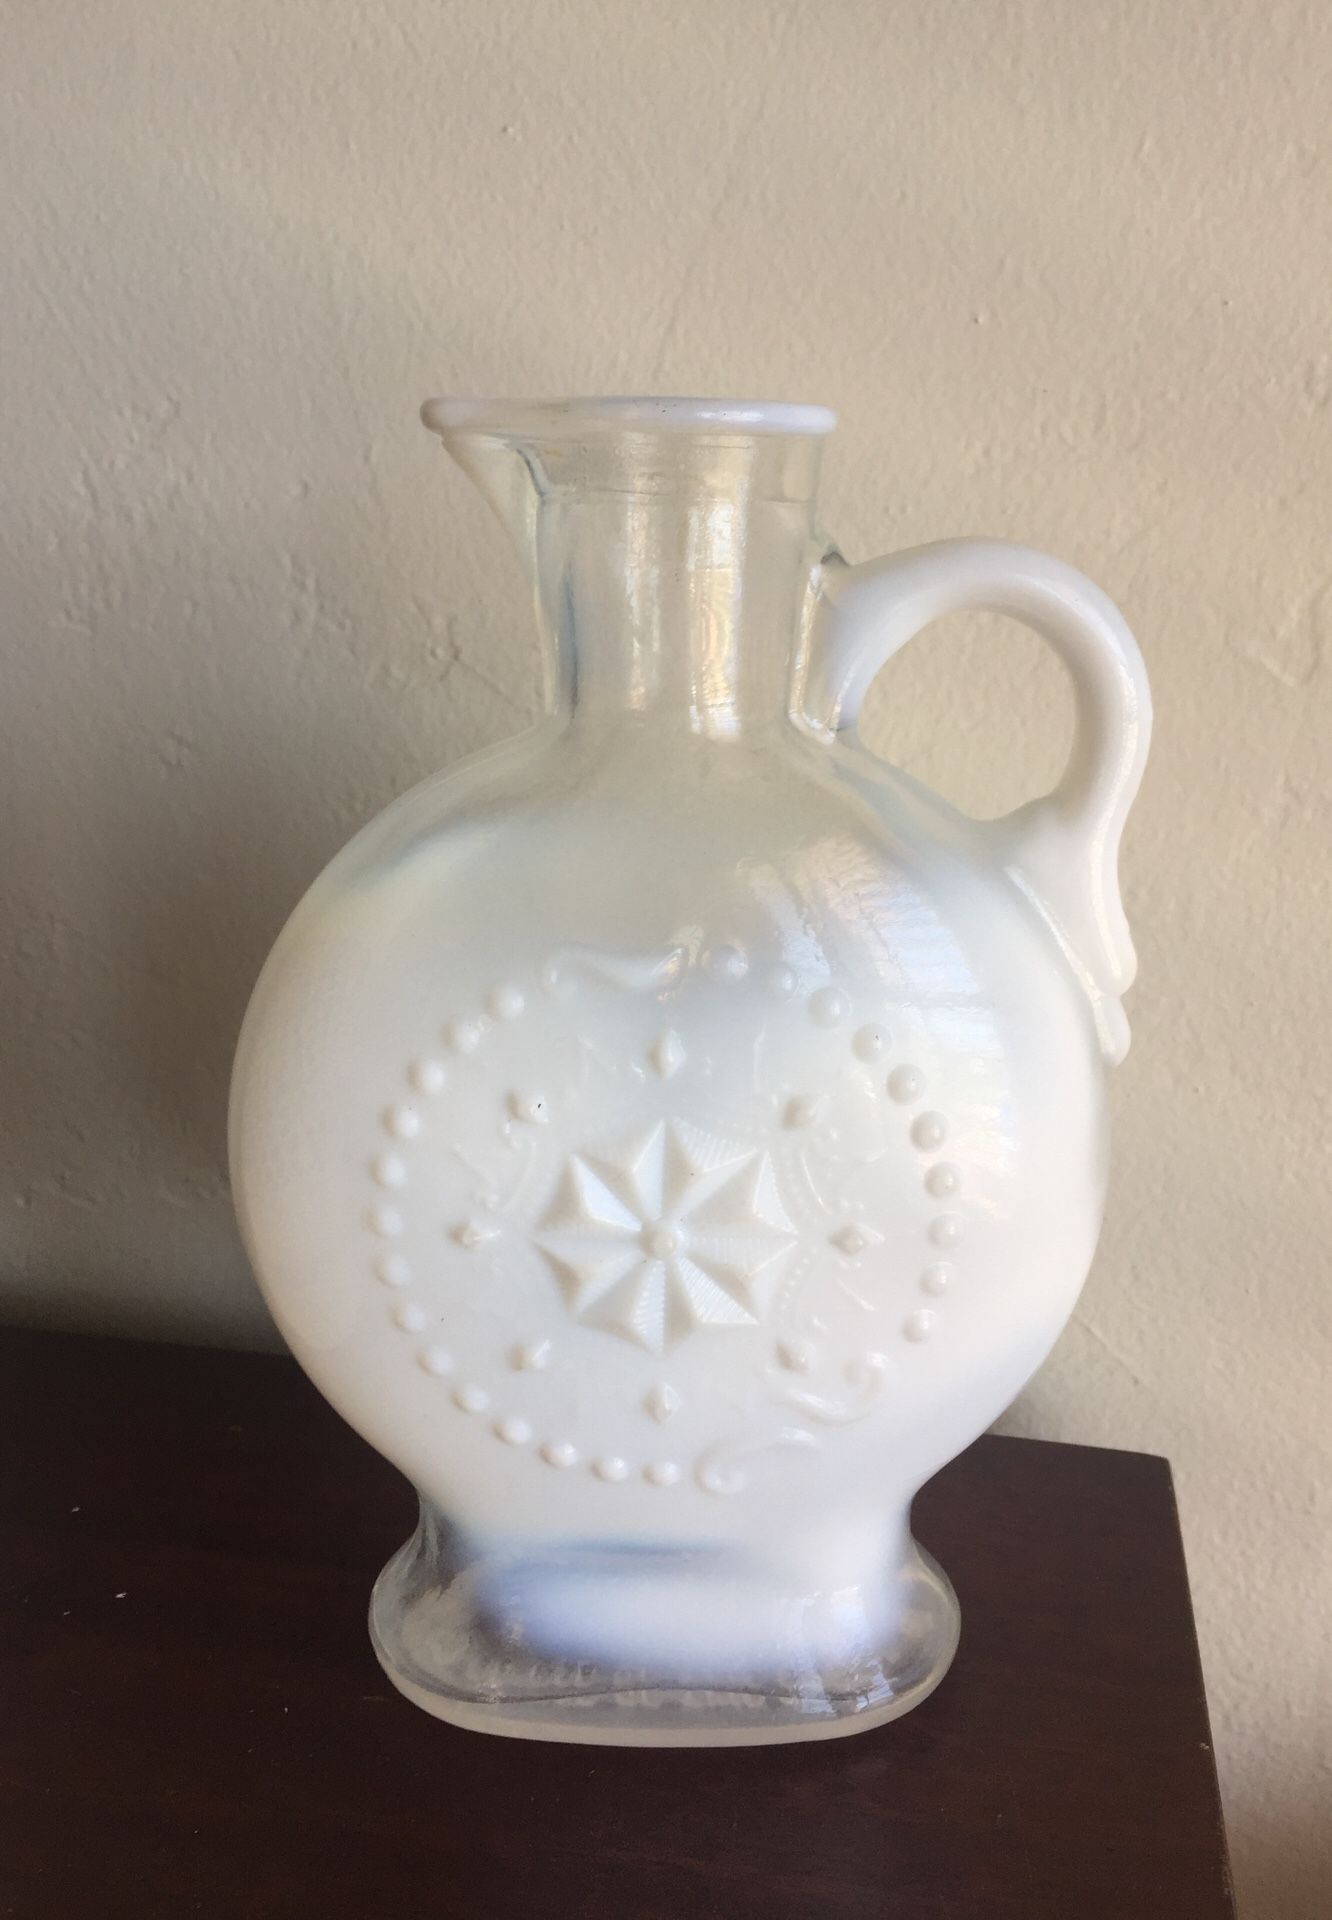 Vintage prohibition era glass jar/vase/glassware